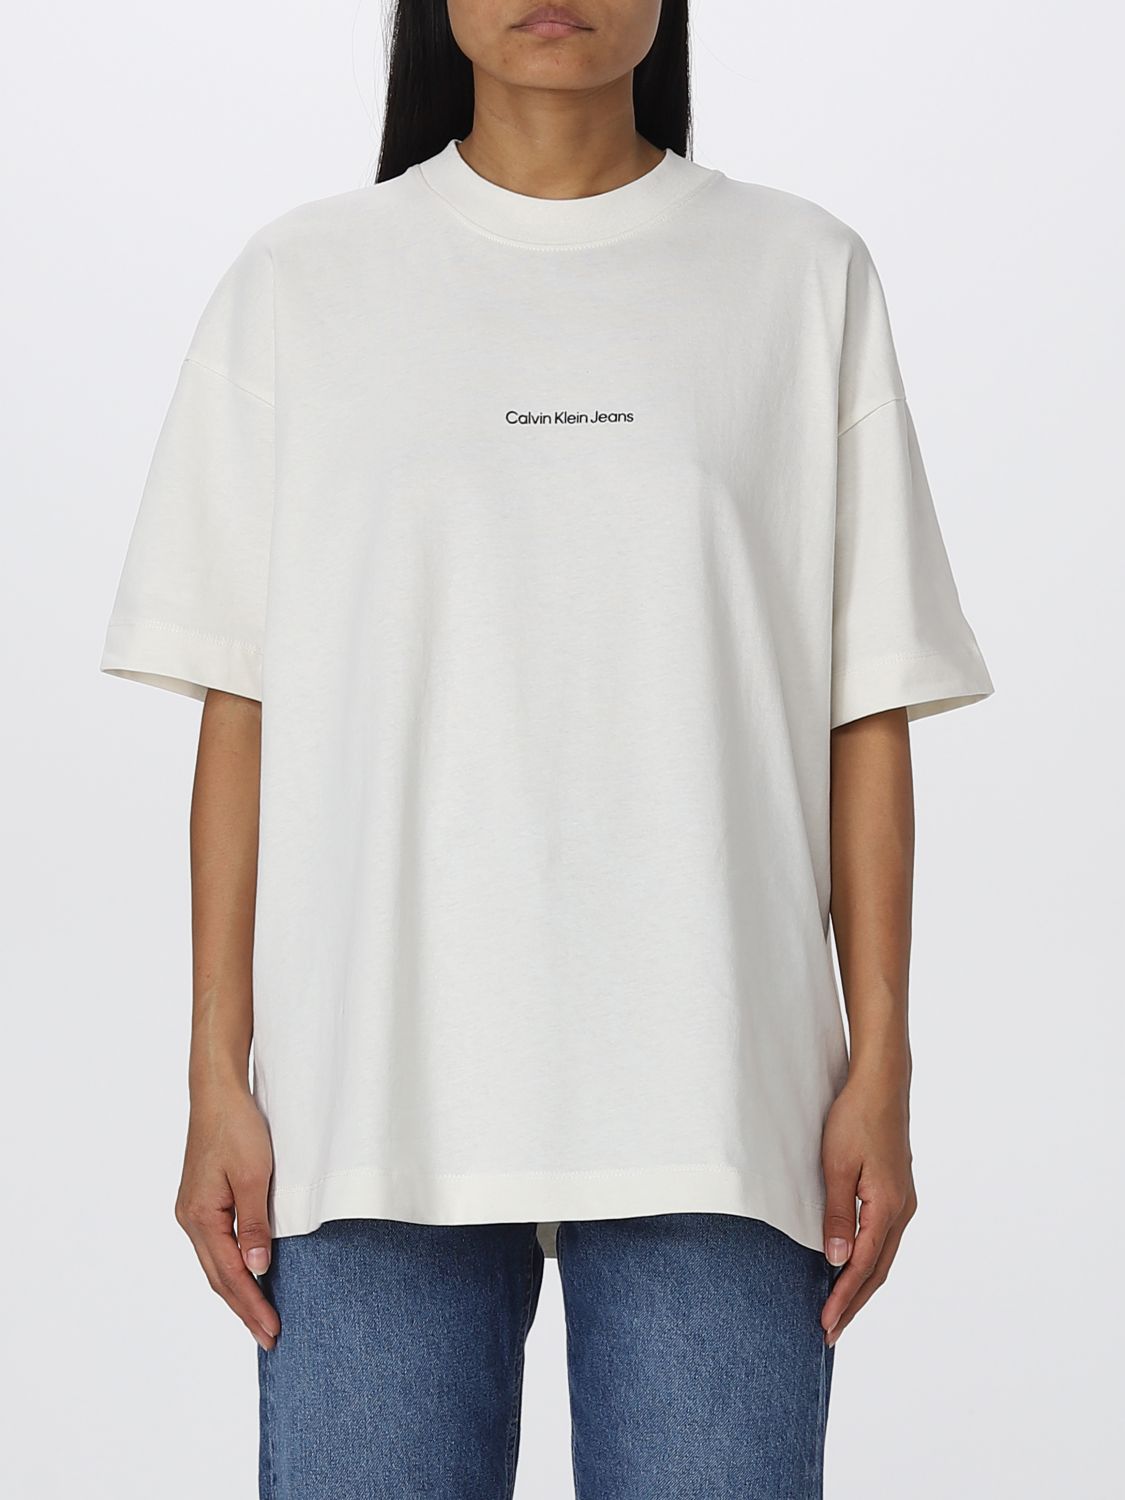 CALVIN KLEIN JEANS: t-shirt for woman - White | Calvin Klein Jeans t ...